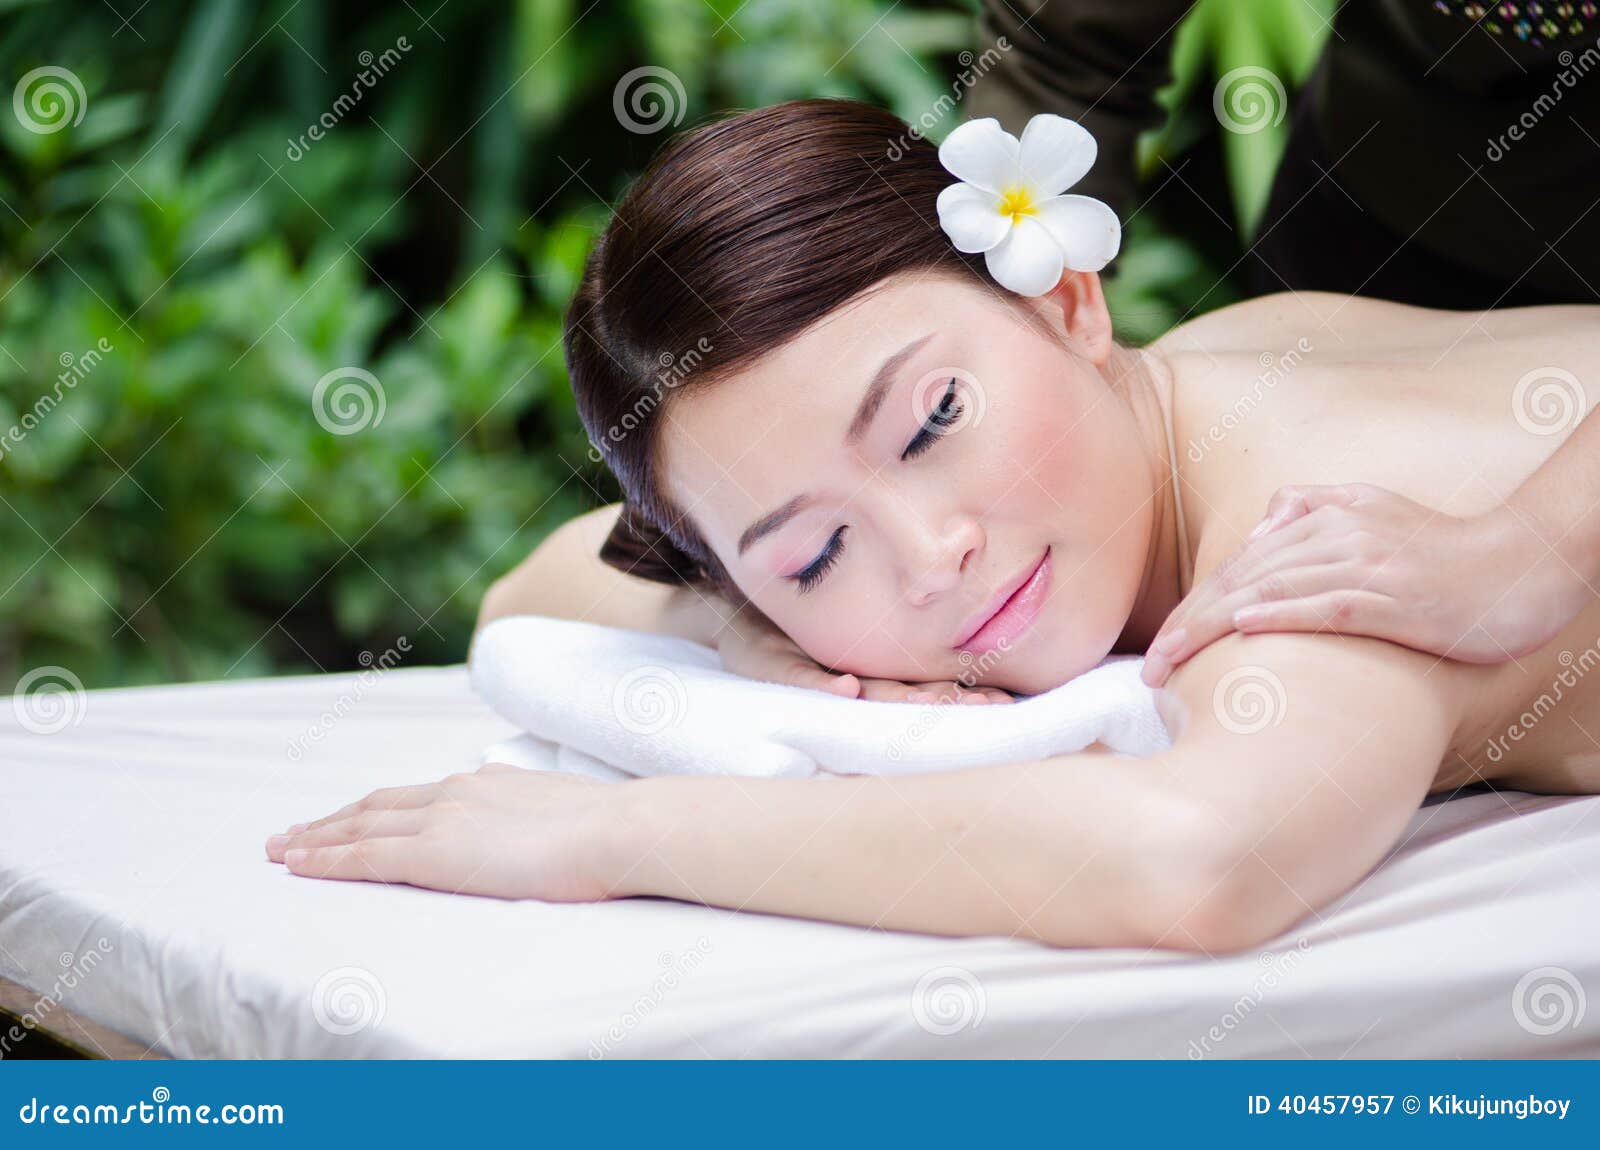 Beautiful Asian Woman Doing Spa Massage Stock Image Image Of Care